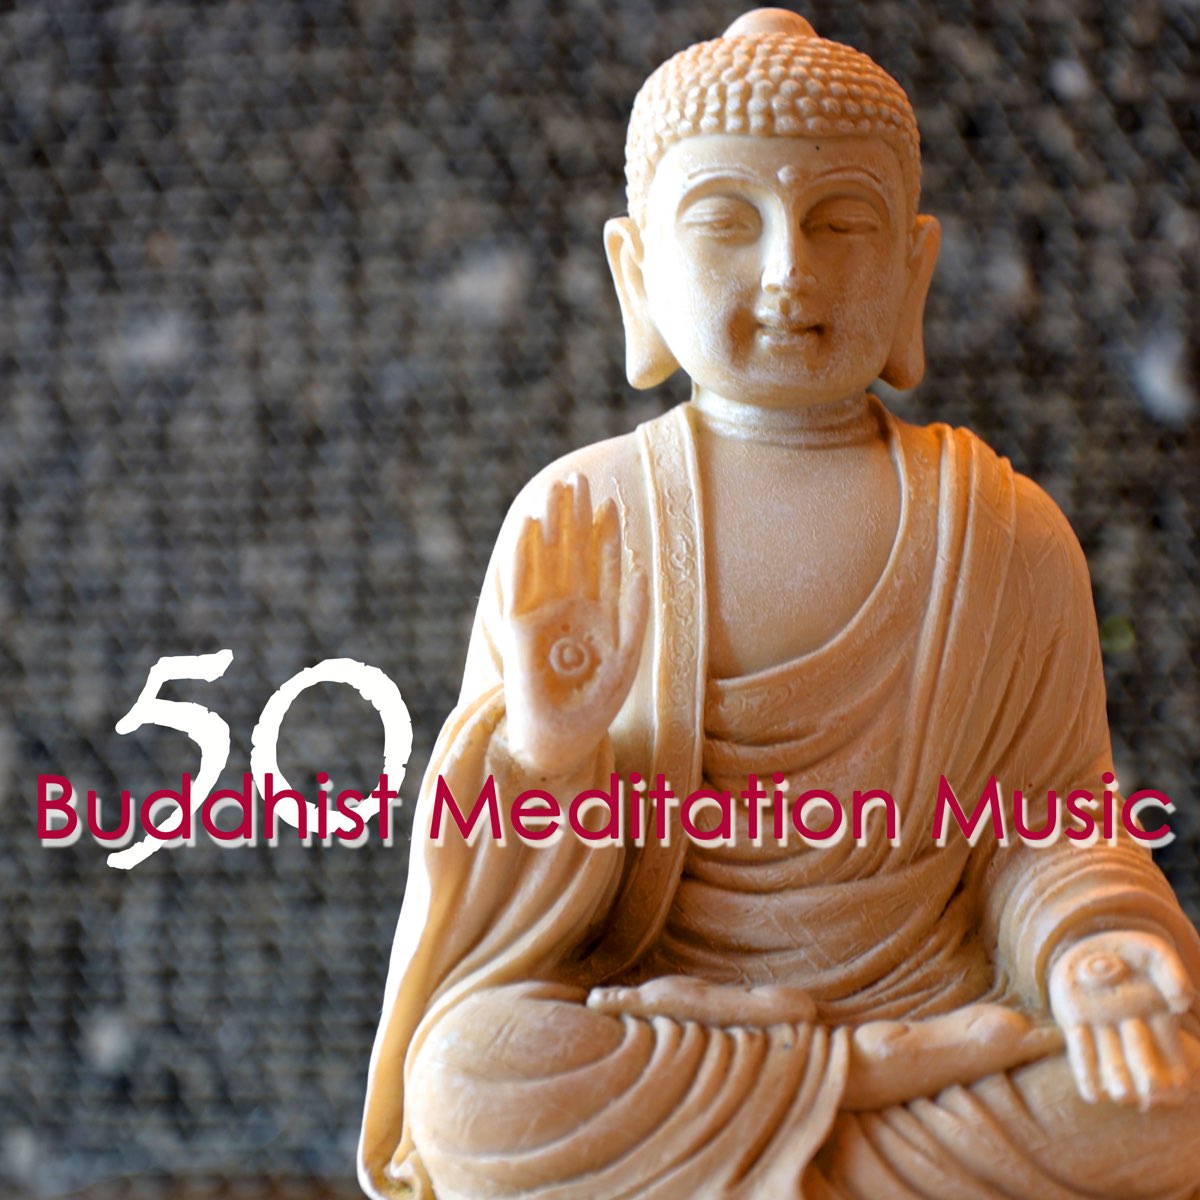 Tibetan Meditation Music adlı sanatçının Buddhist Meditation Music: 50  Tibet Asian Background Music, Relaxing Songs and Sounds of Nature for Yoga  Space & Zen Meditation albümü Apple Music'te